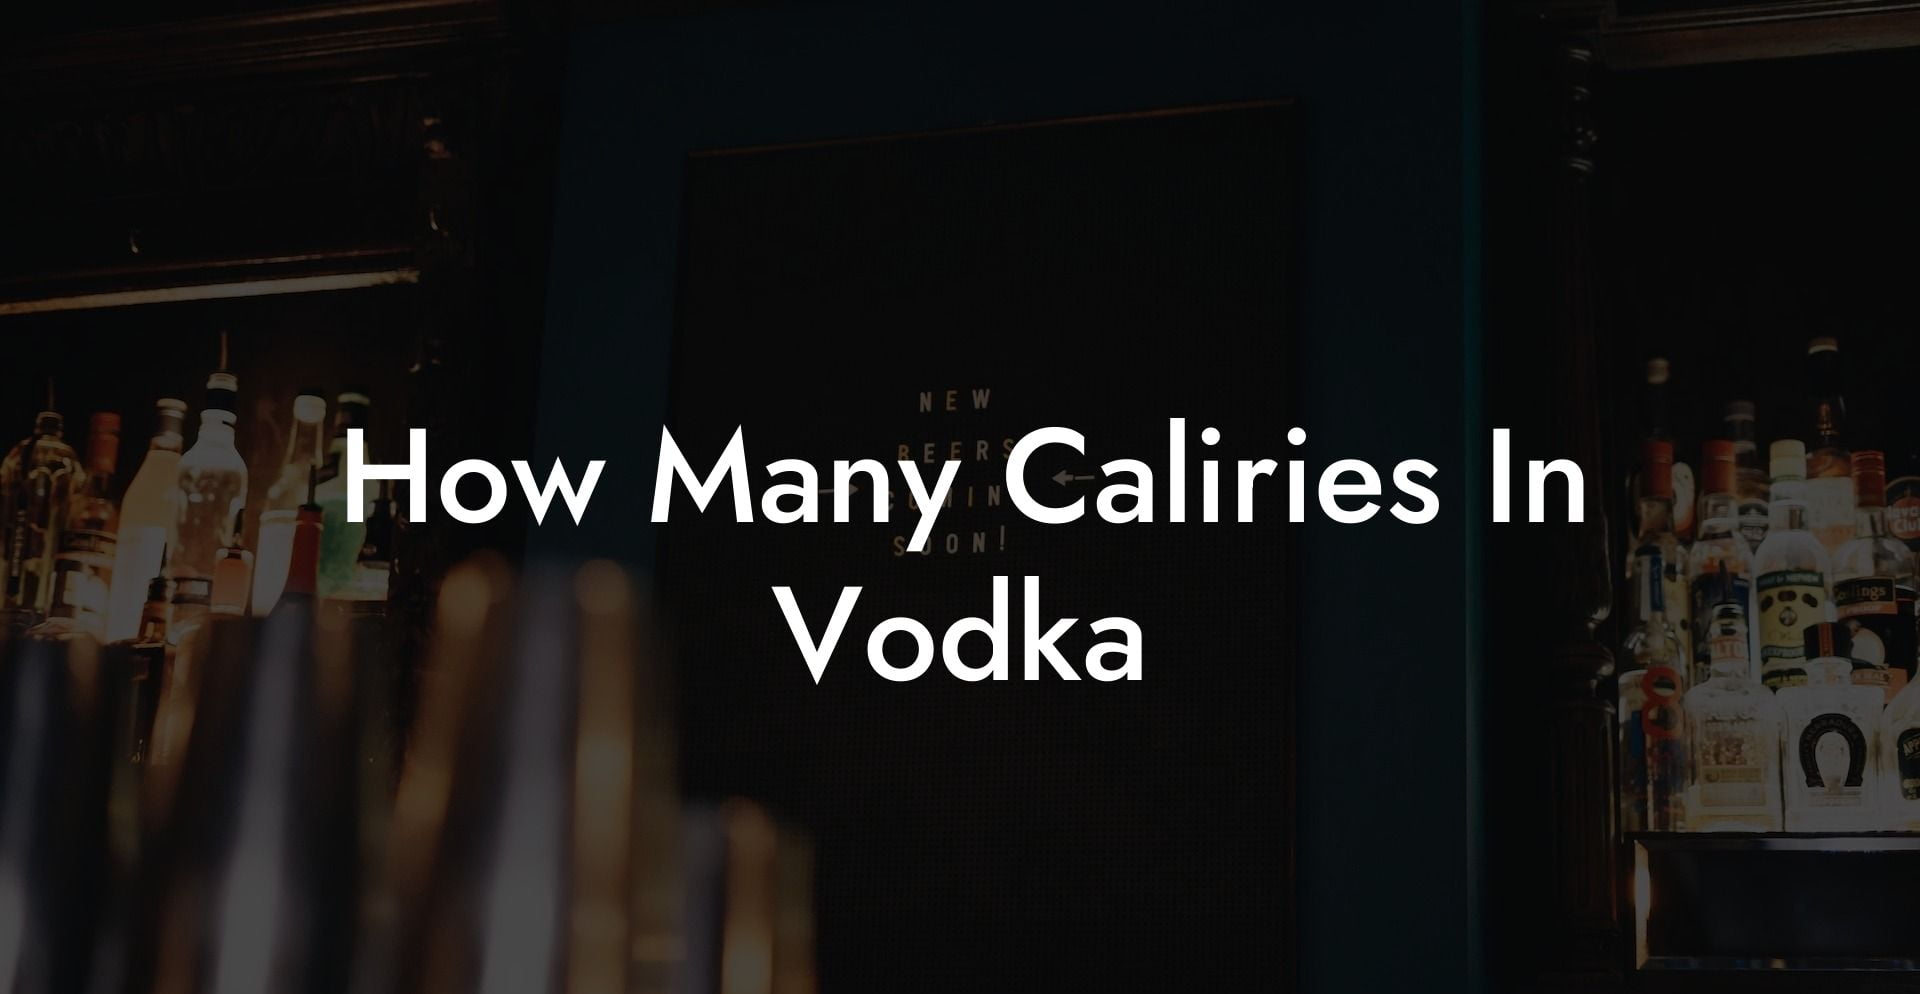 How Many Caliries In Vodka